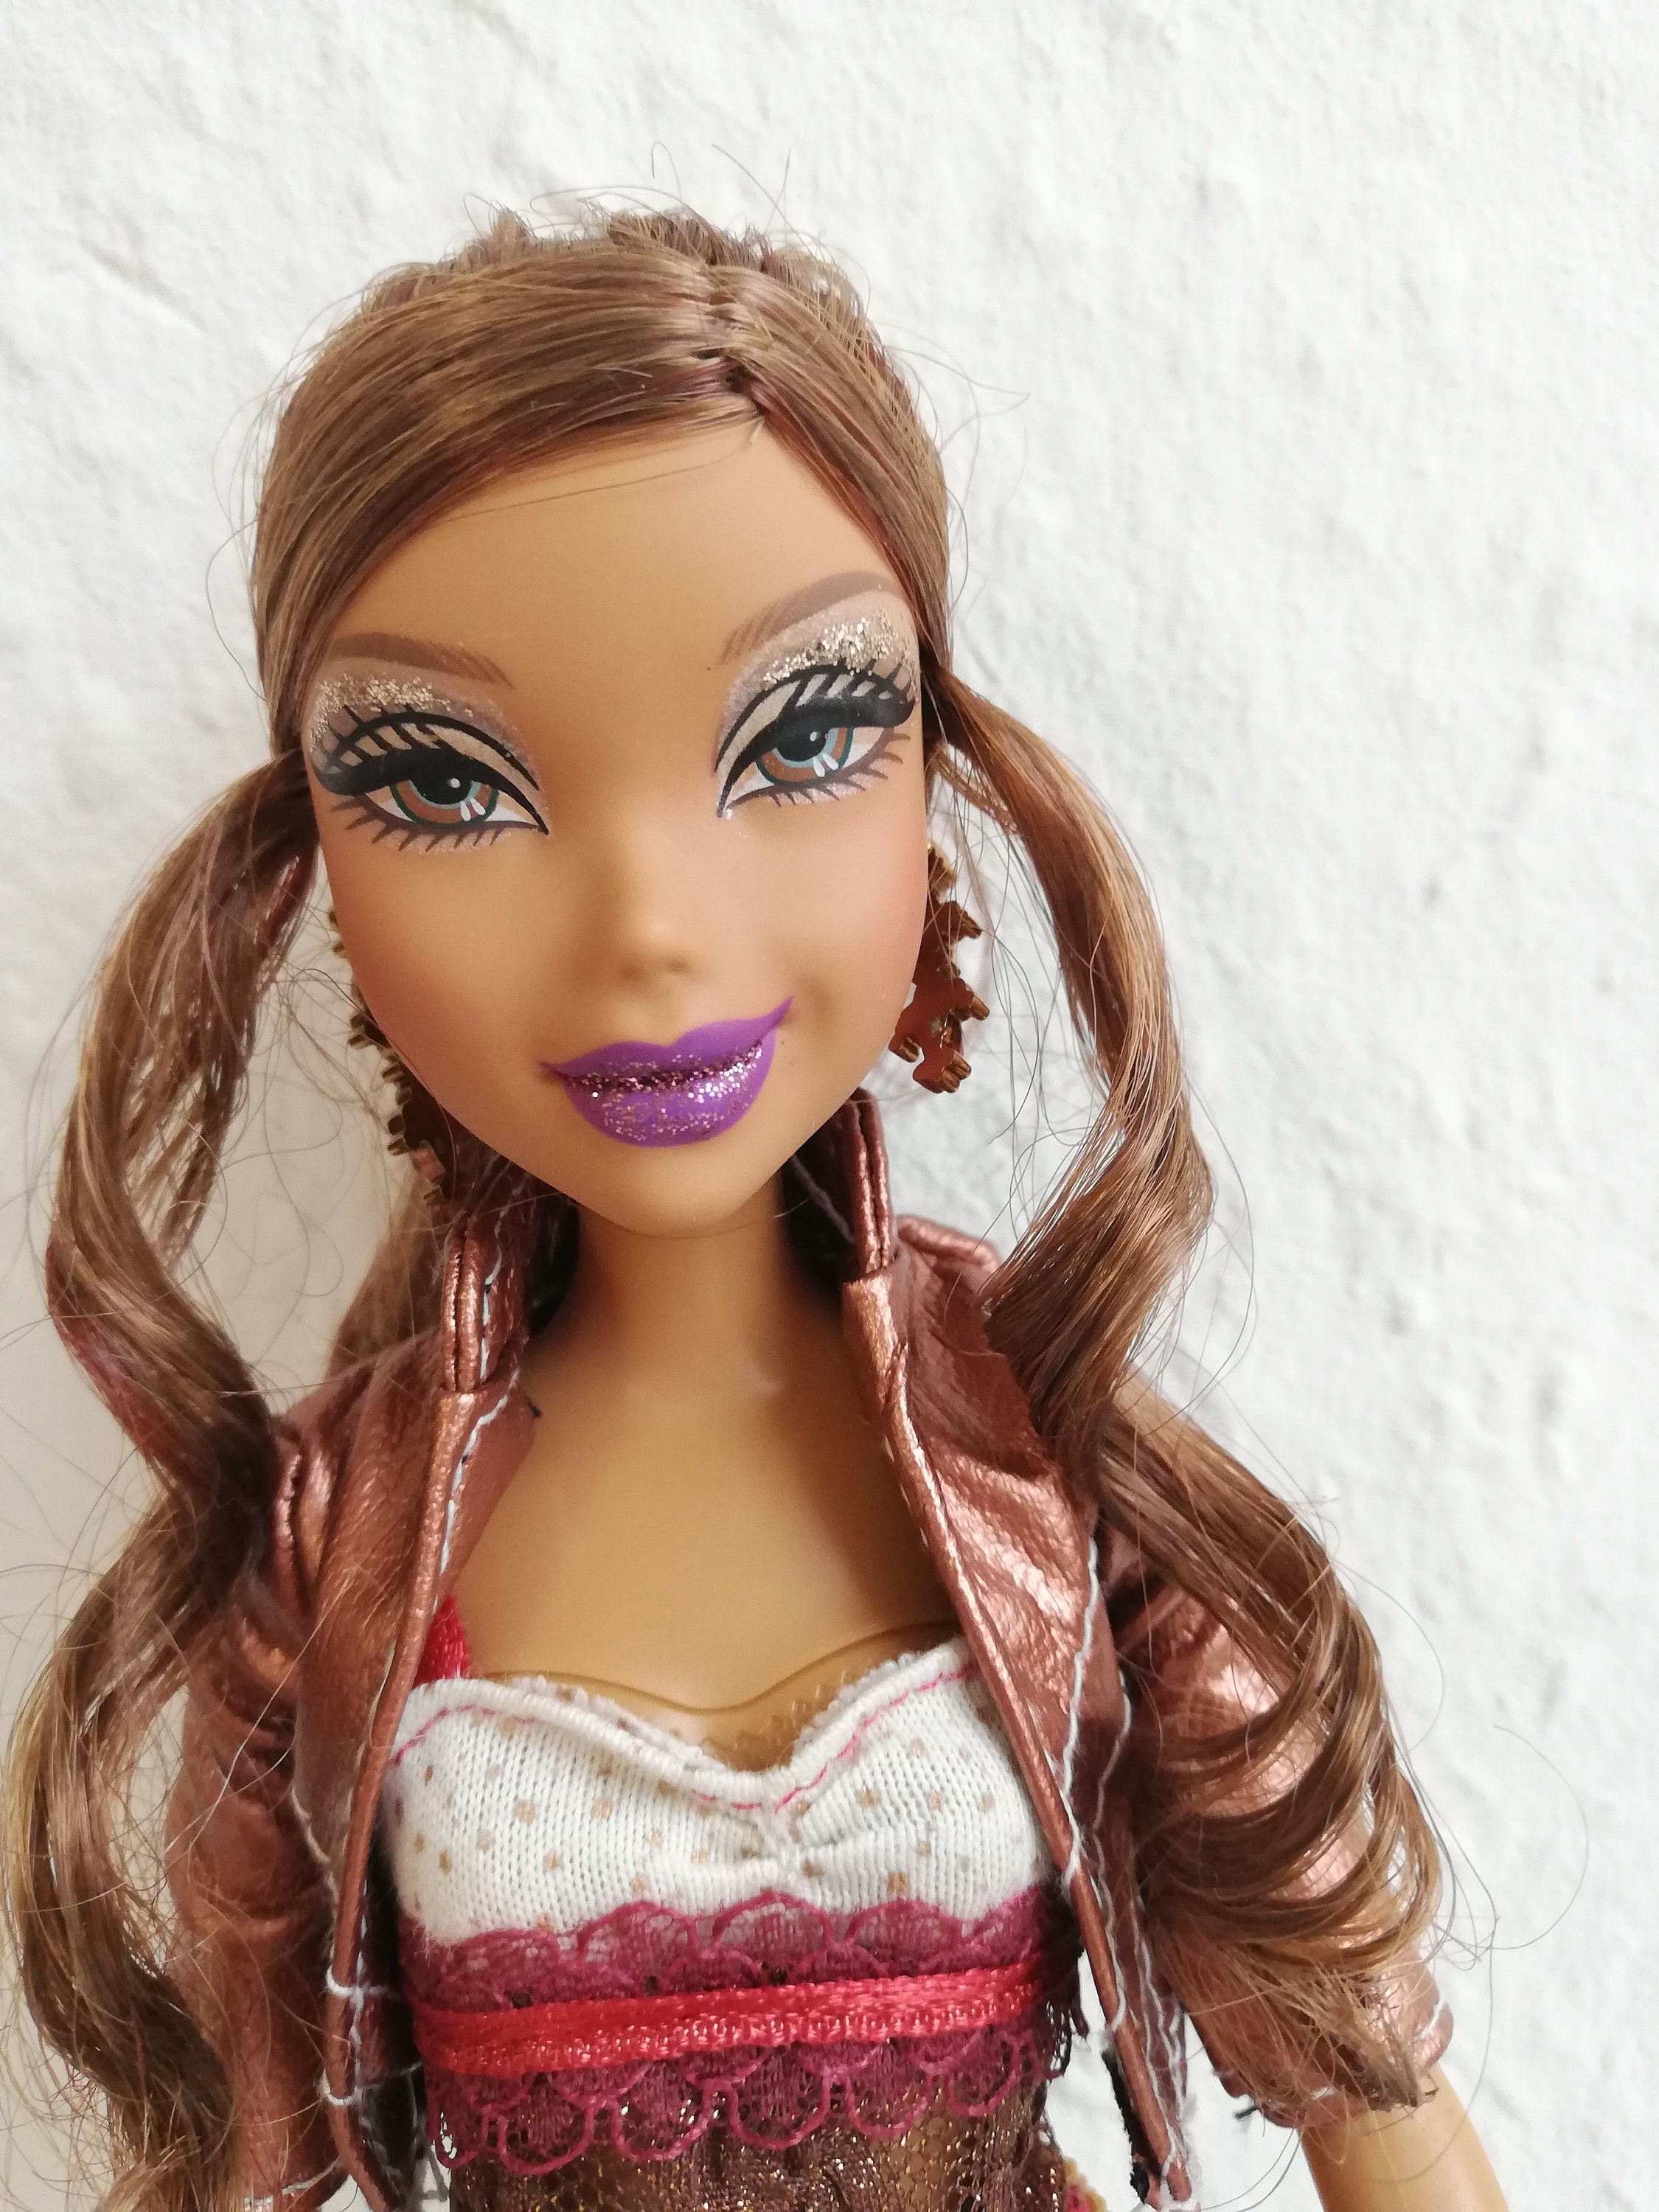 MyScene - My Design Scene - Barbie - Mattel - Brand New/In Box